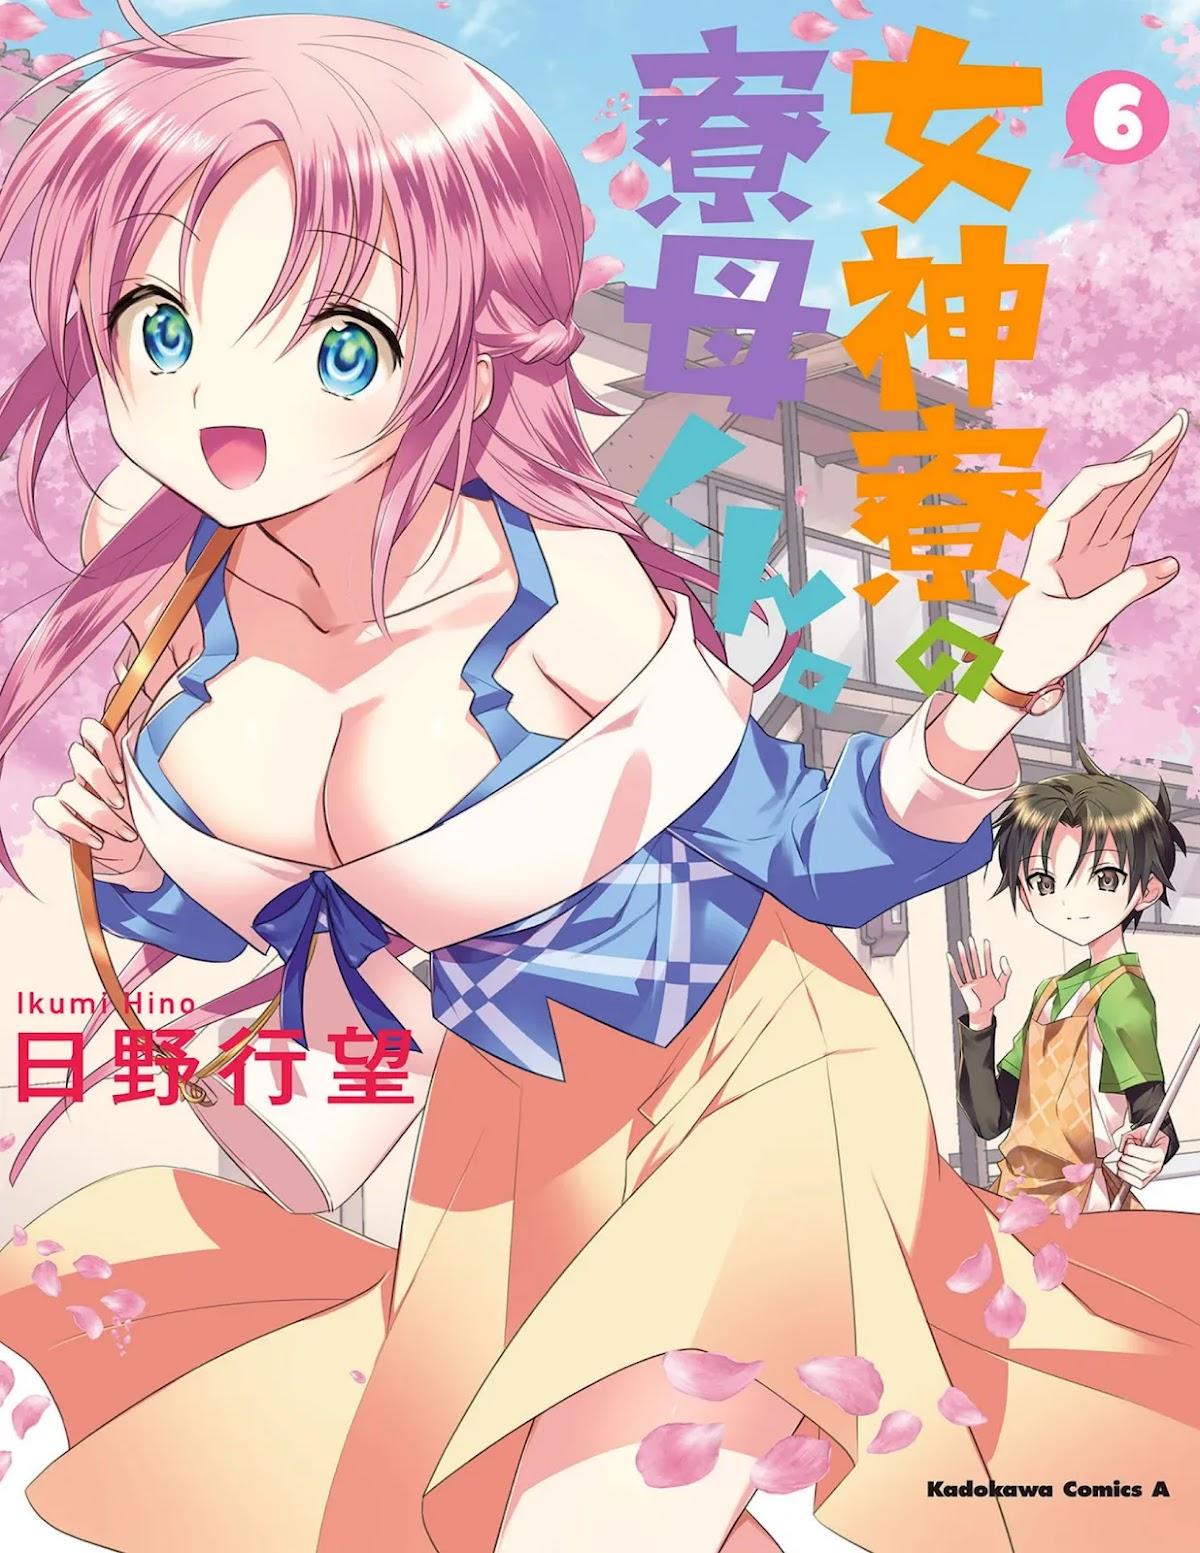 Megami-ryou no Ryoubo-kun. Capítulo 10 - Manga Online